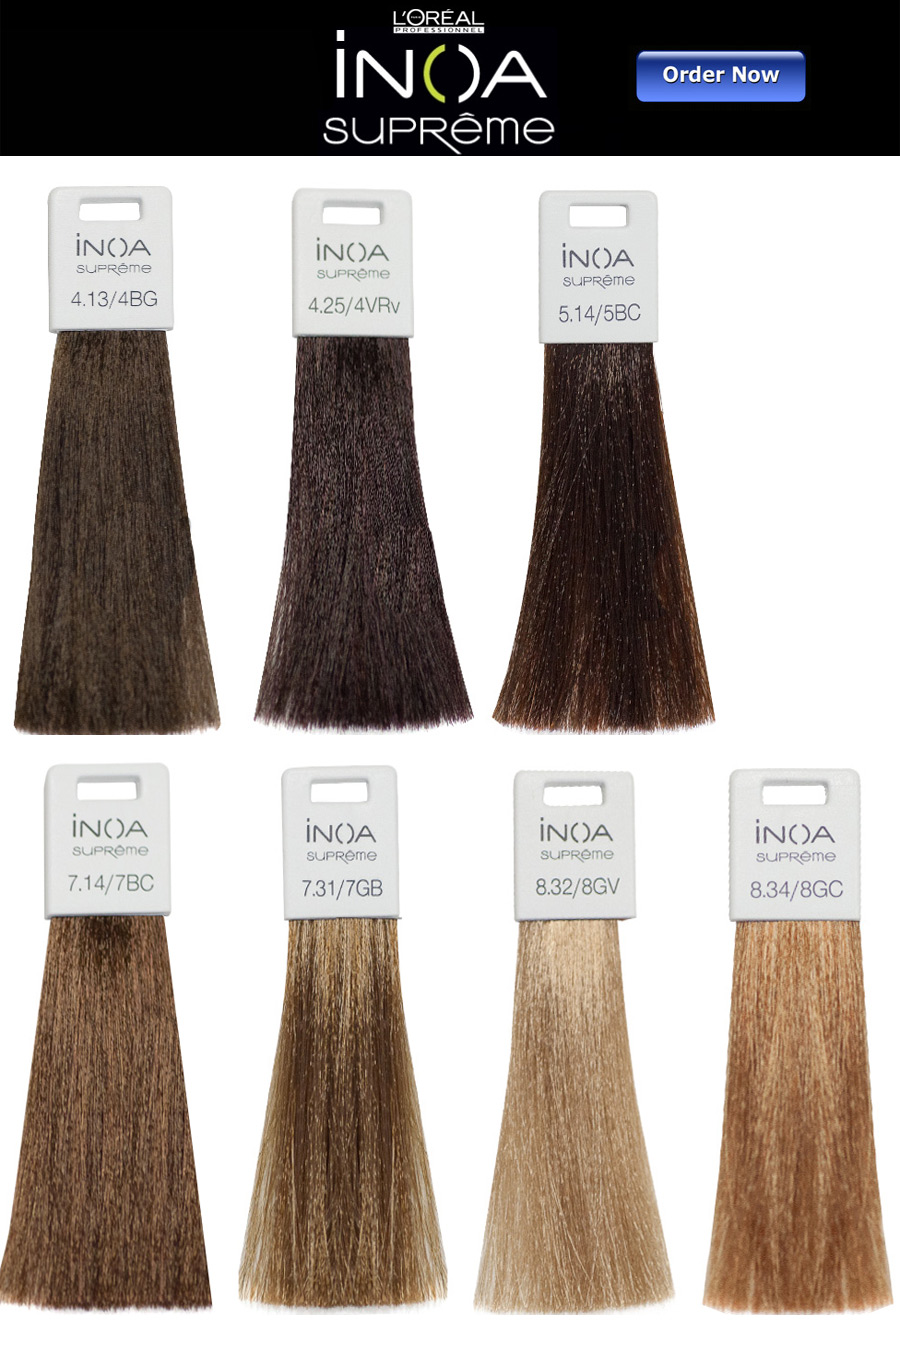 L'oreal Inoa Supreme Hair Color Chart